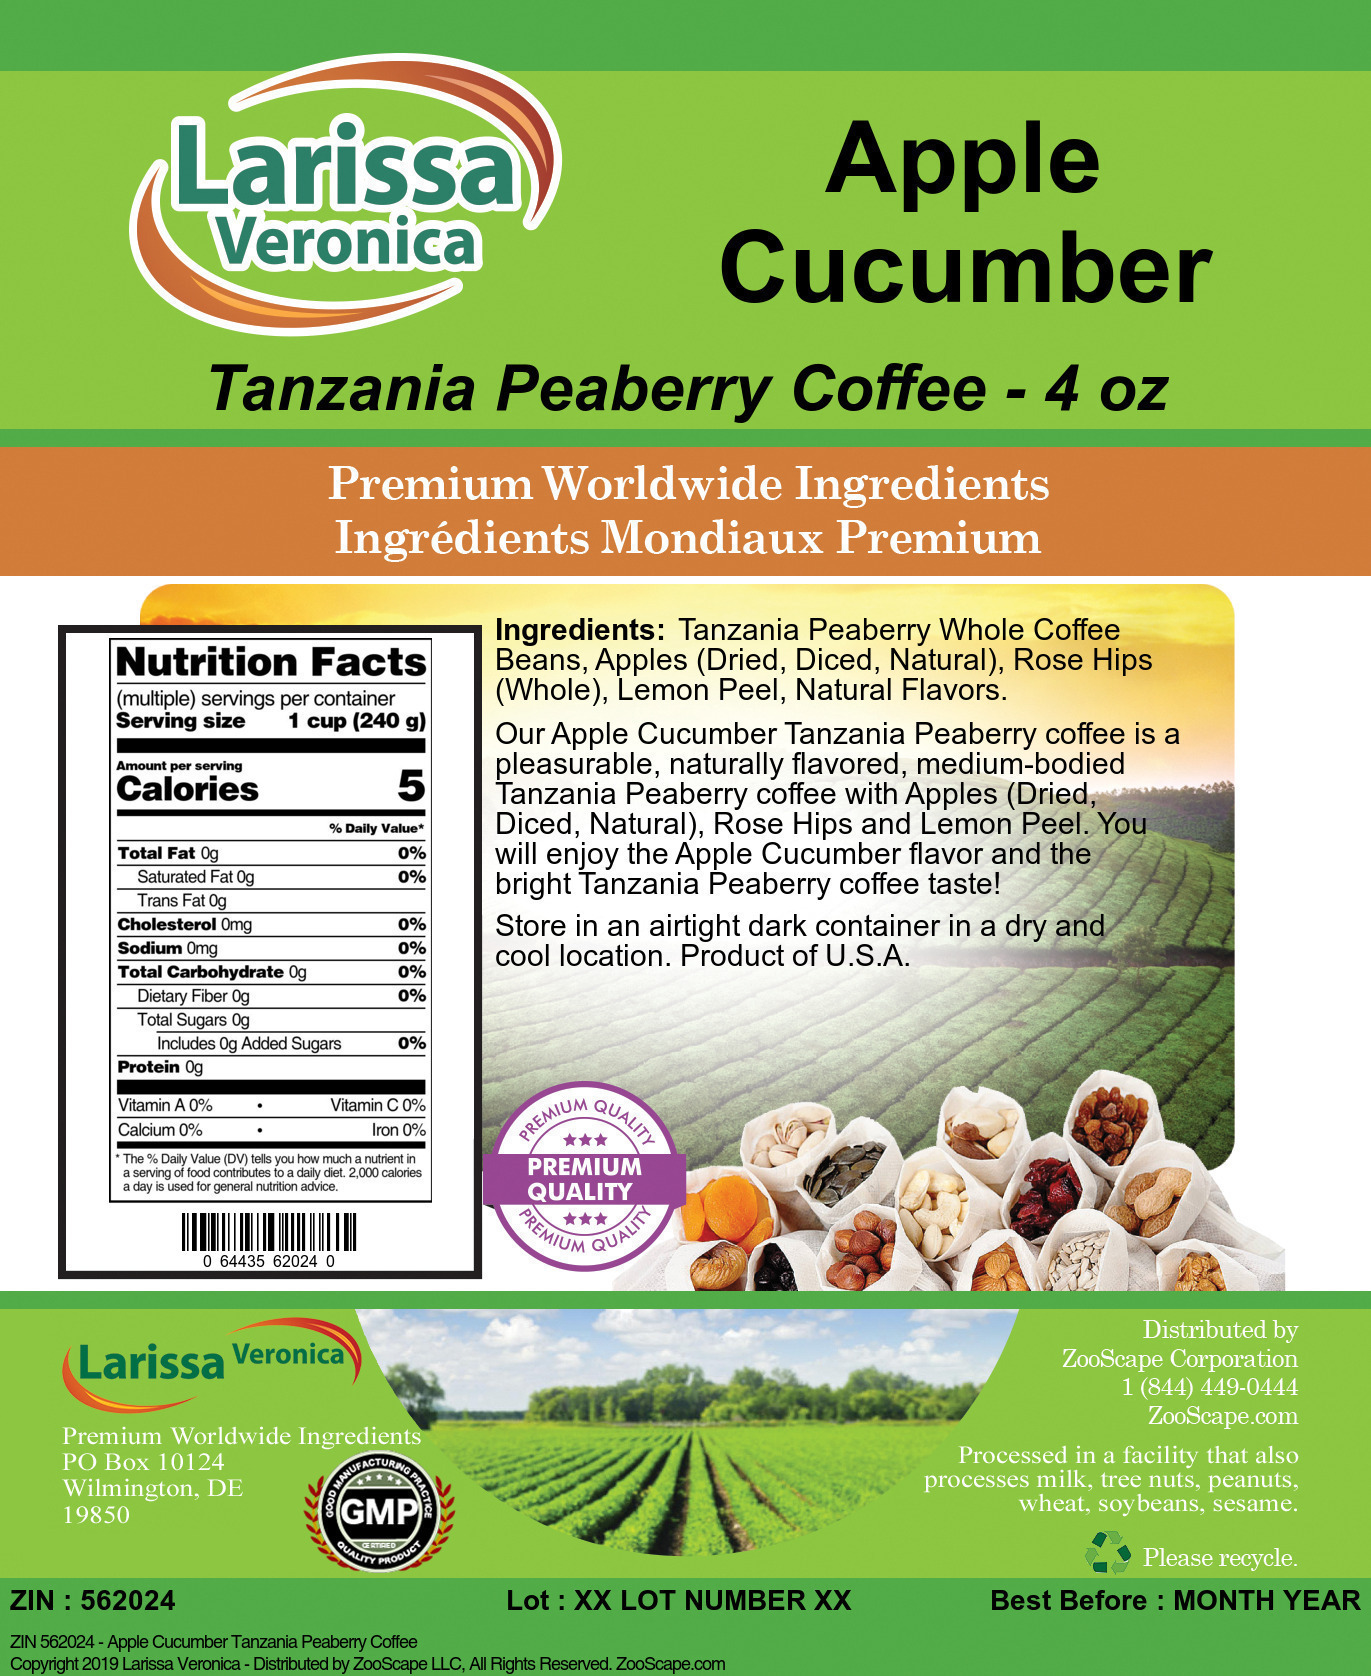 Apple Cucumber Tanzania Peaberry Coffee - Label